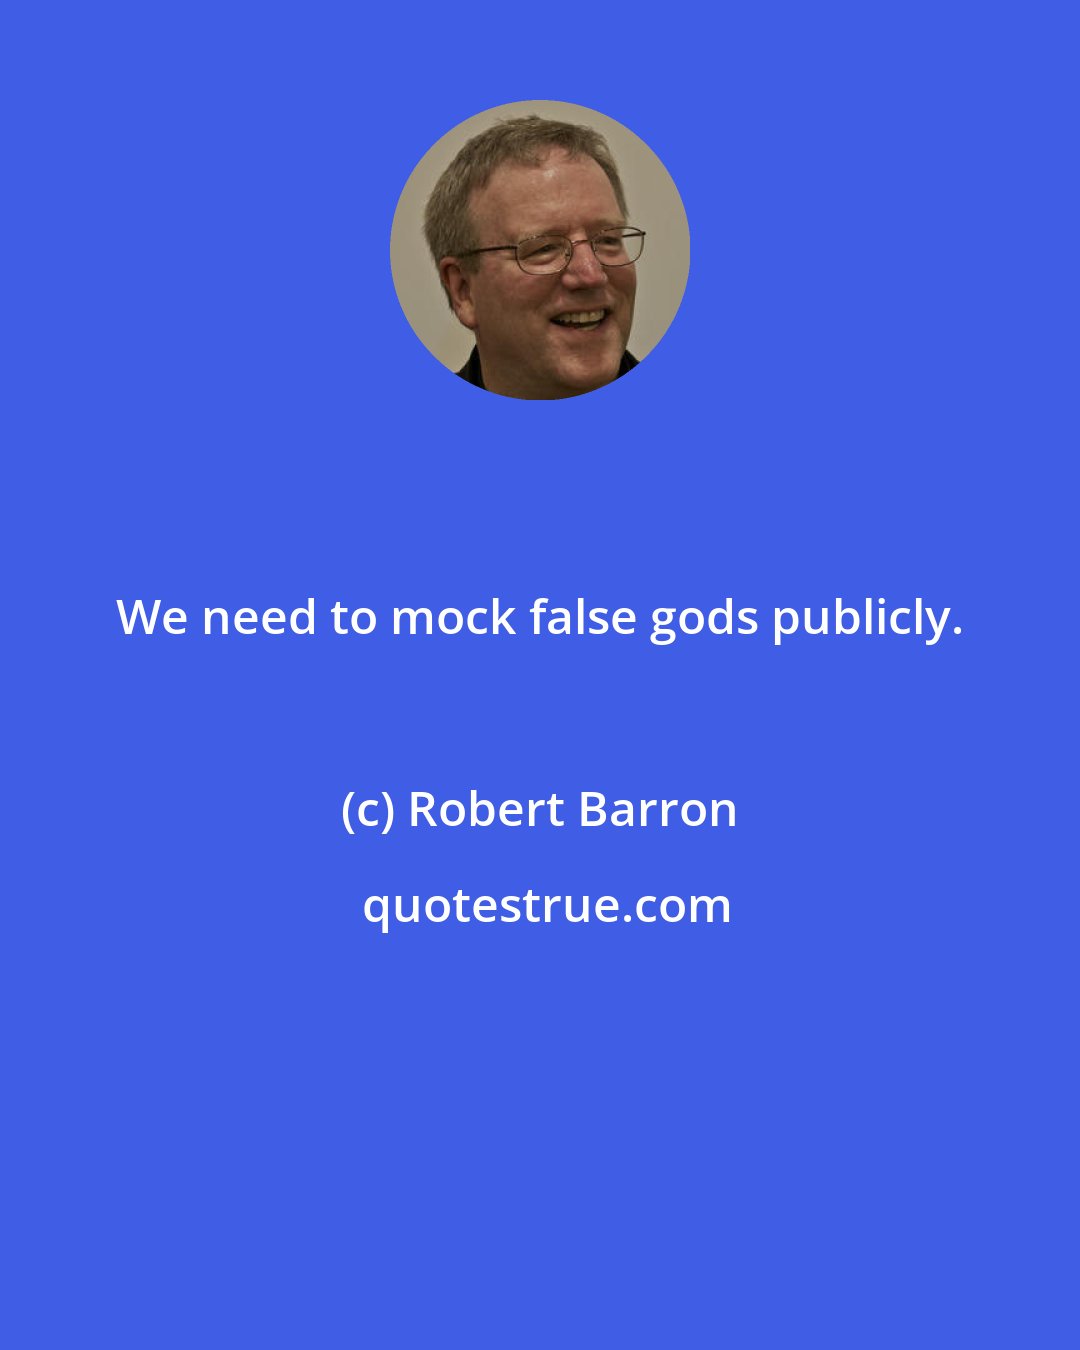 Robert Barron: We need to mock false gods publicly.